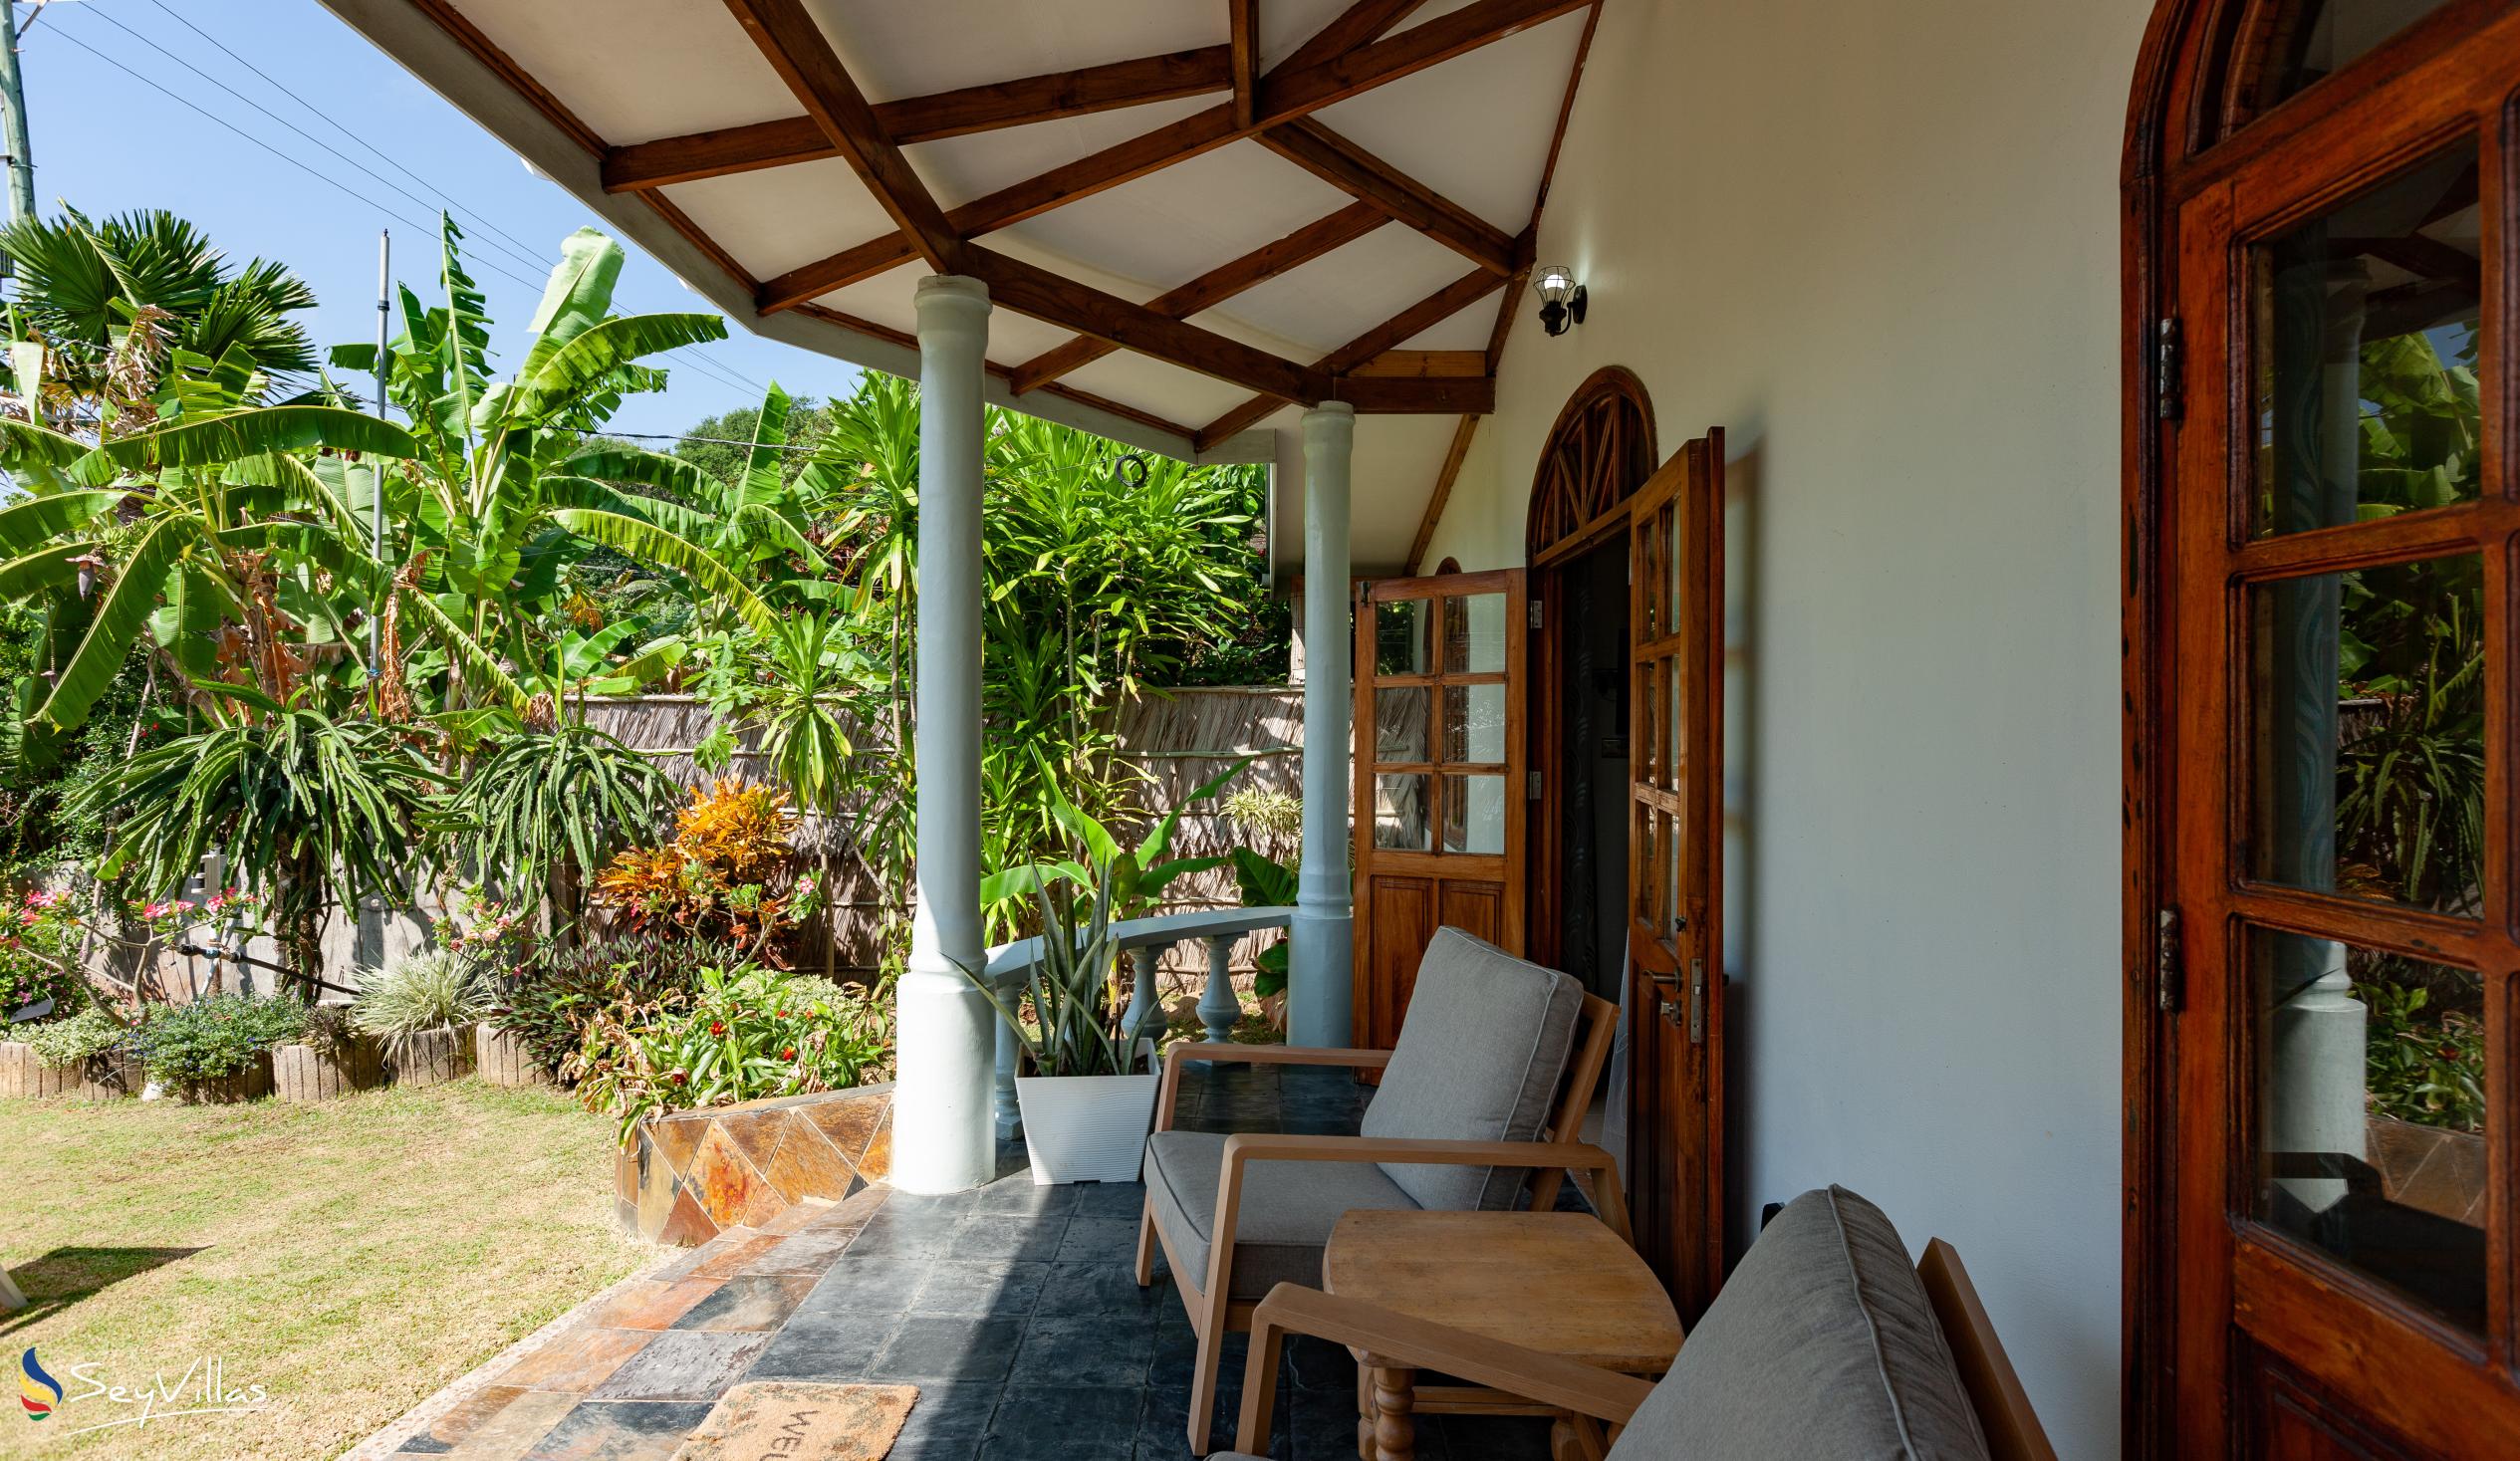 Photo 8: La Petite Maison - Outdoor area - Praslin (Seychelles)